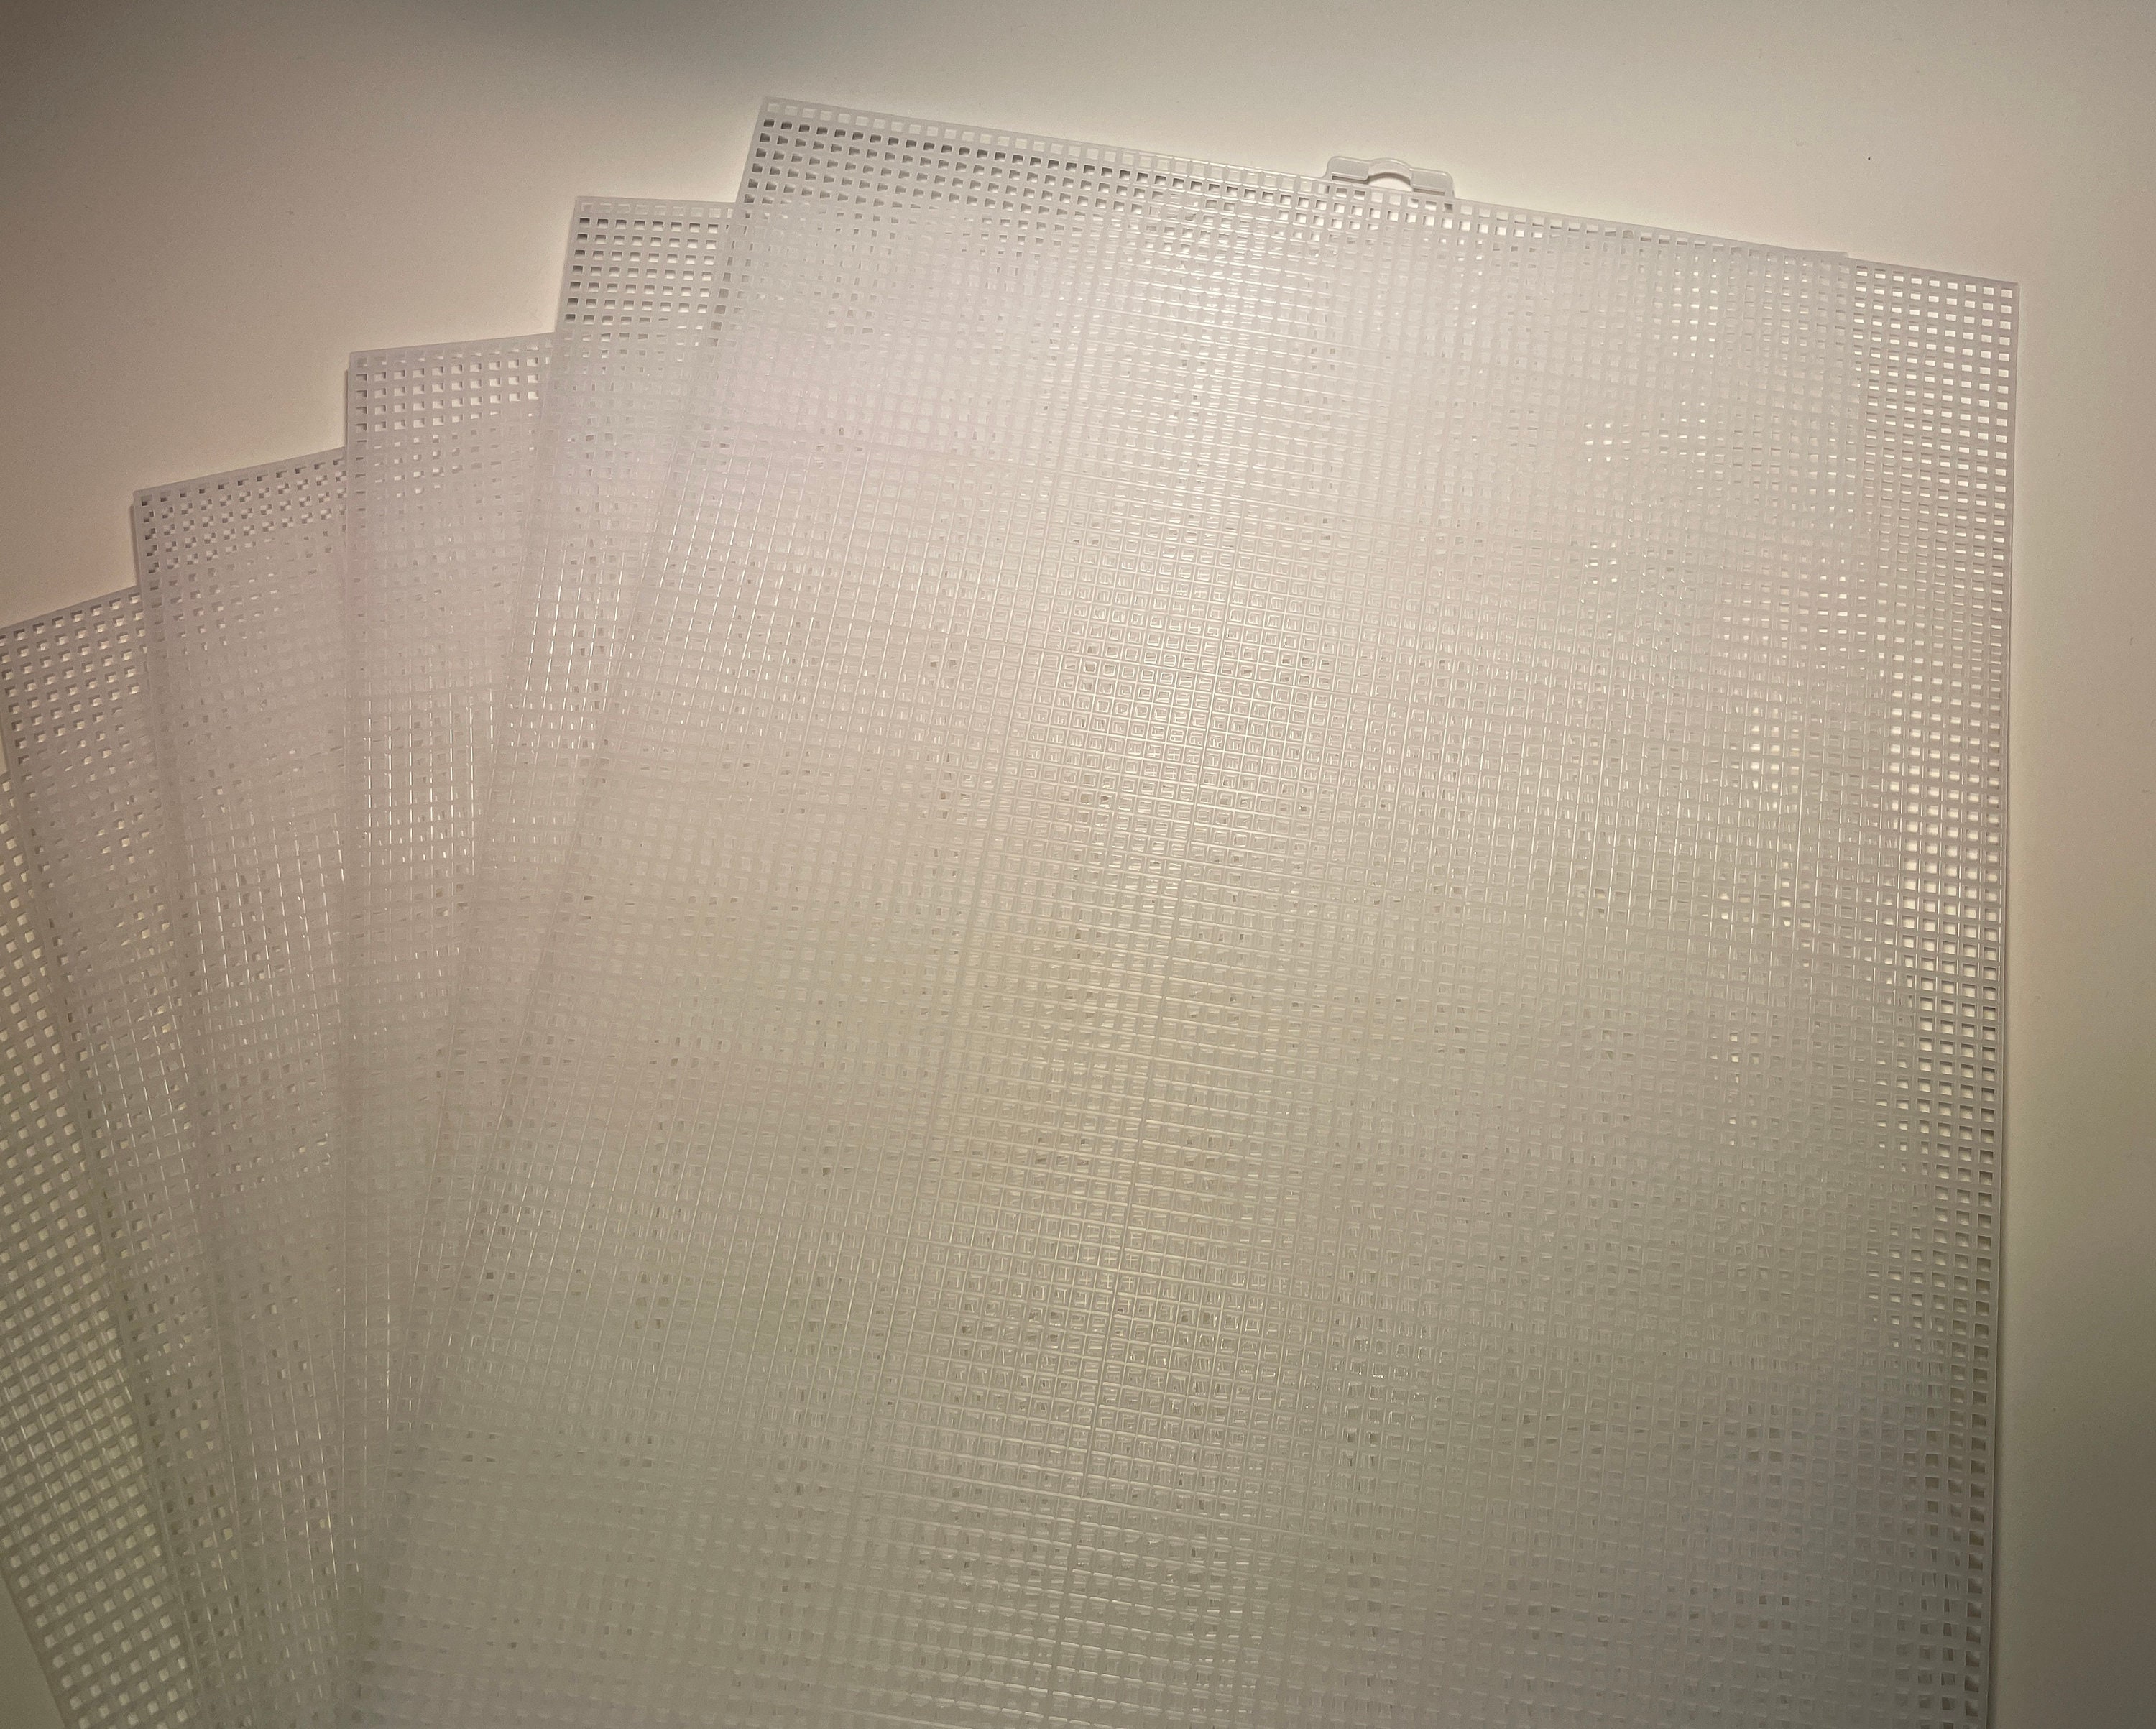 7 Mesh Count Plastic Canvas Sheet 10.5 x 13.5 Inch 30 Colors [1 Sheet]